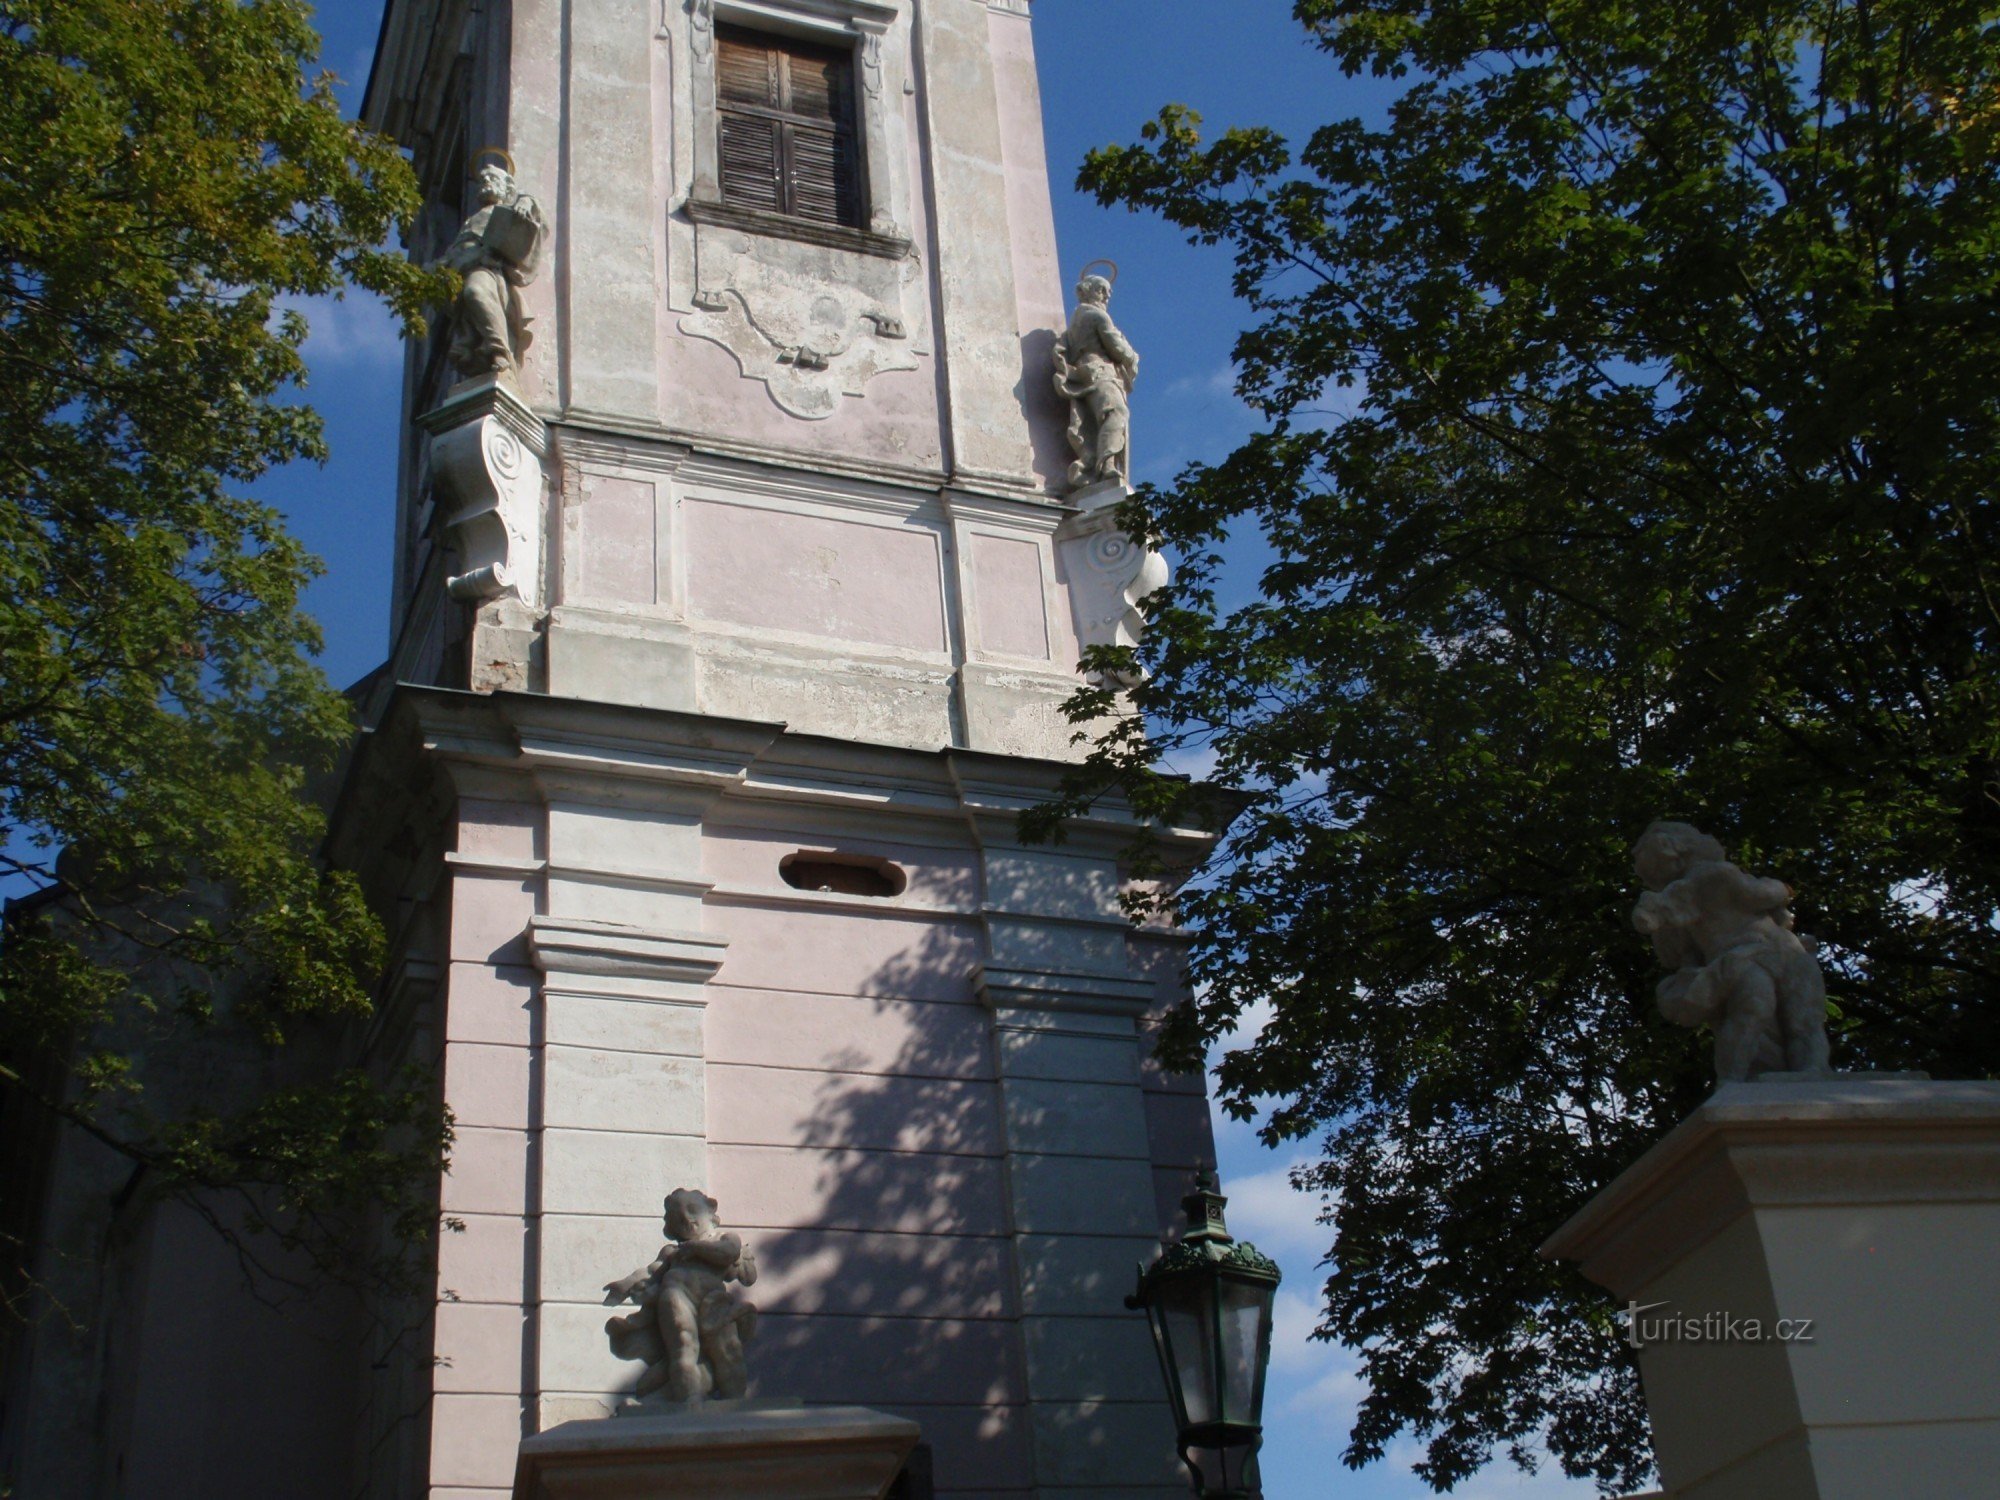 Statuile lui Alexander Jelínek în Tasov